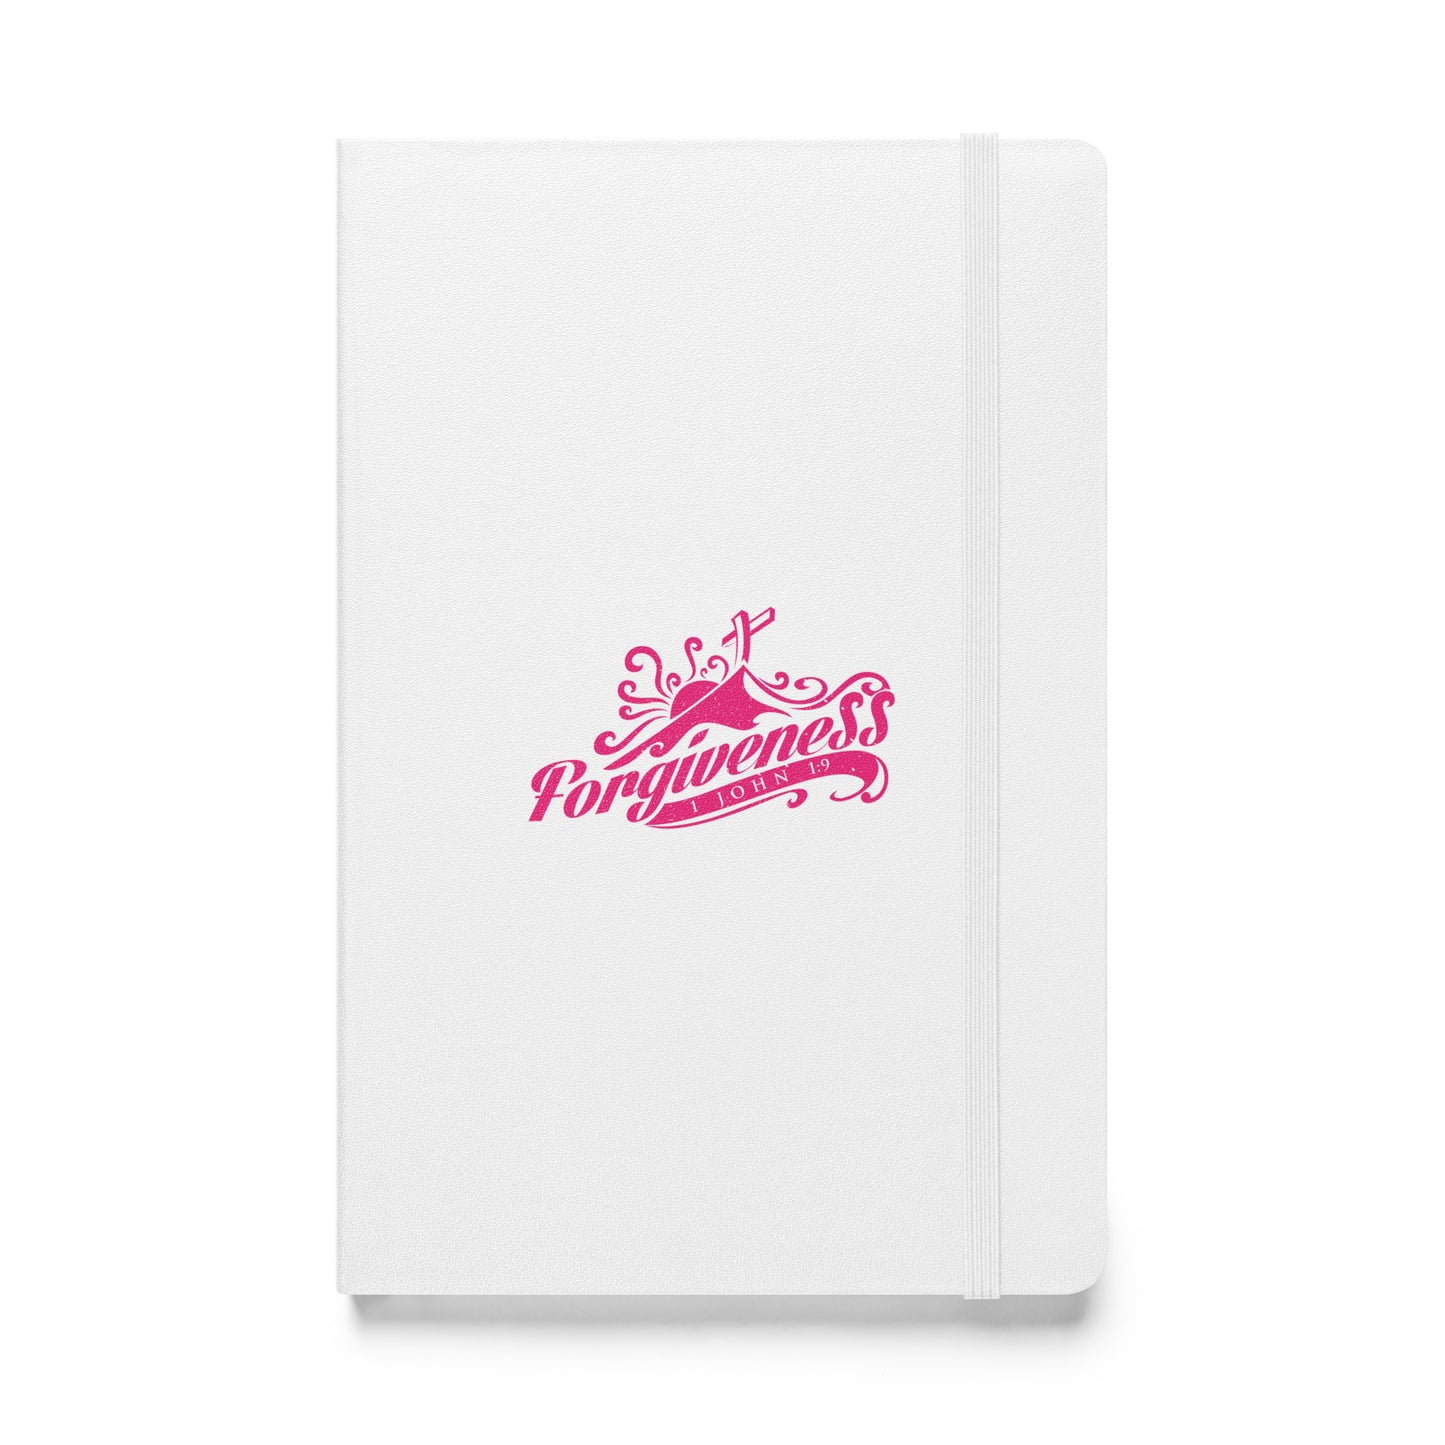 Forgiveness - Hardcover bound notebook